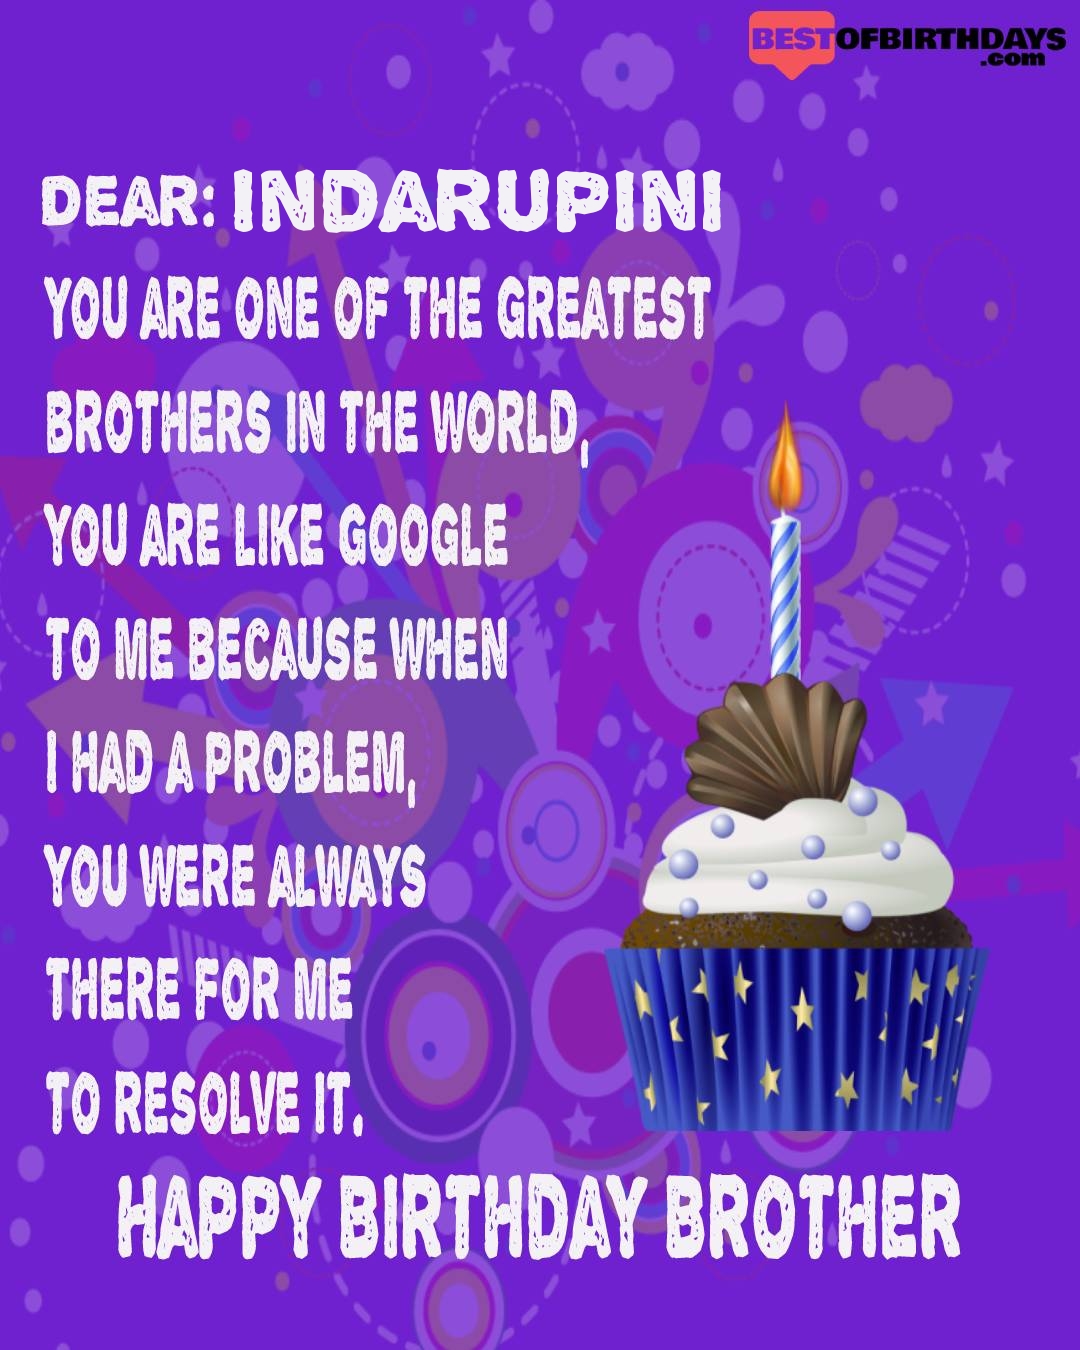 Happy birthday indarupini bhai brother bro